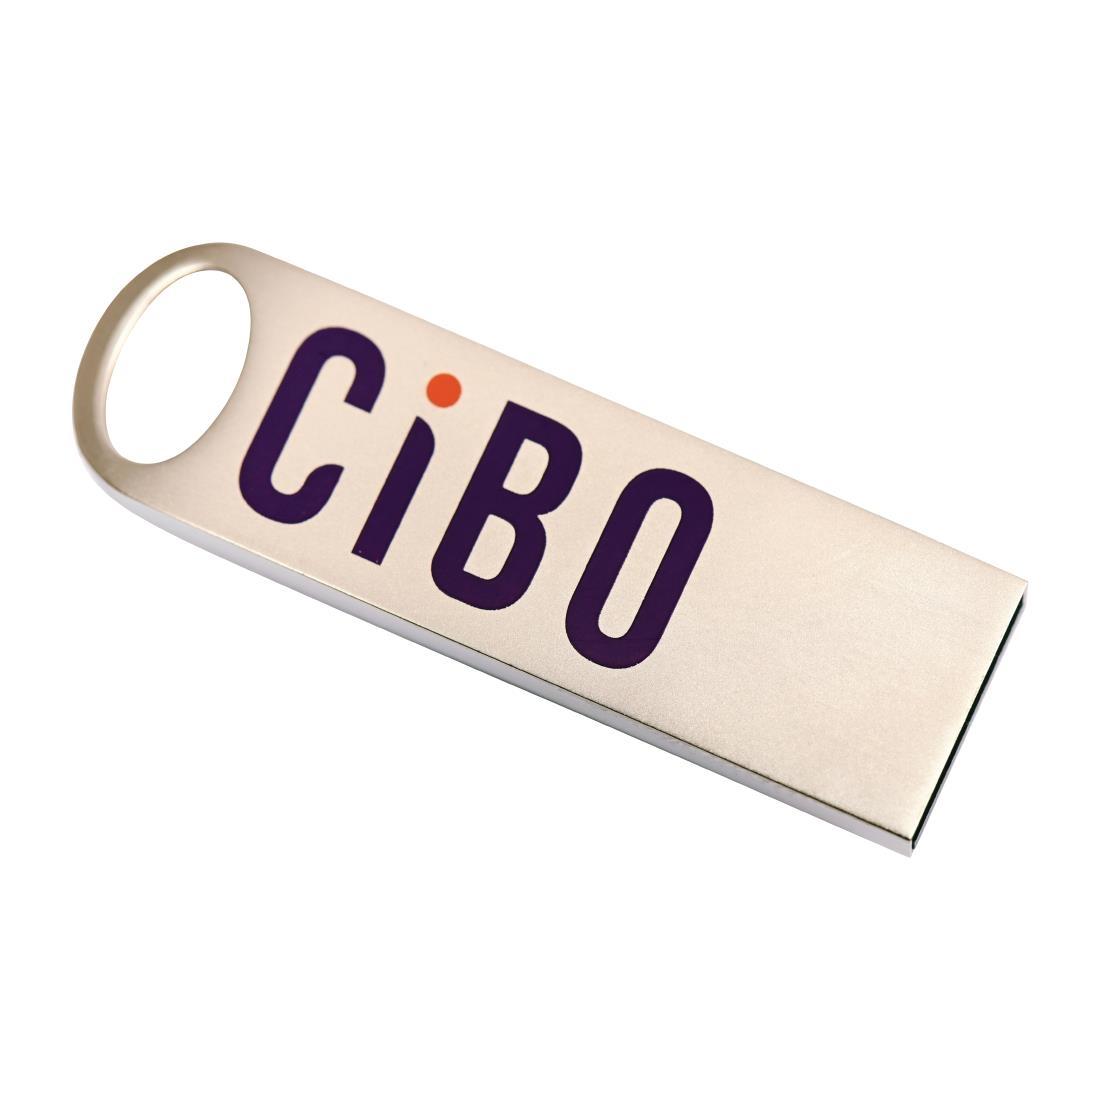 Lincat USB Stick for CiBO Ovens - FC692  - 1